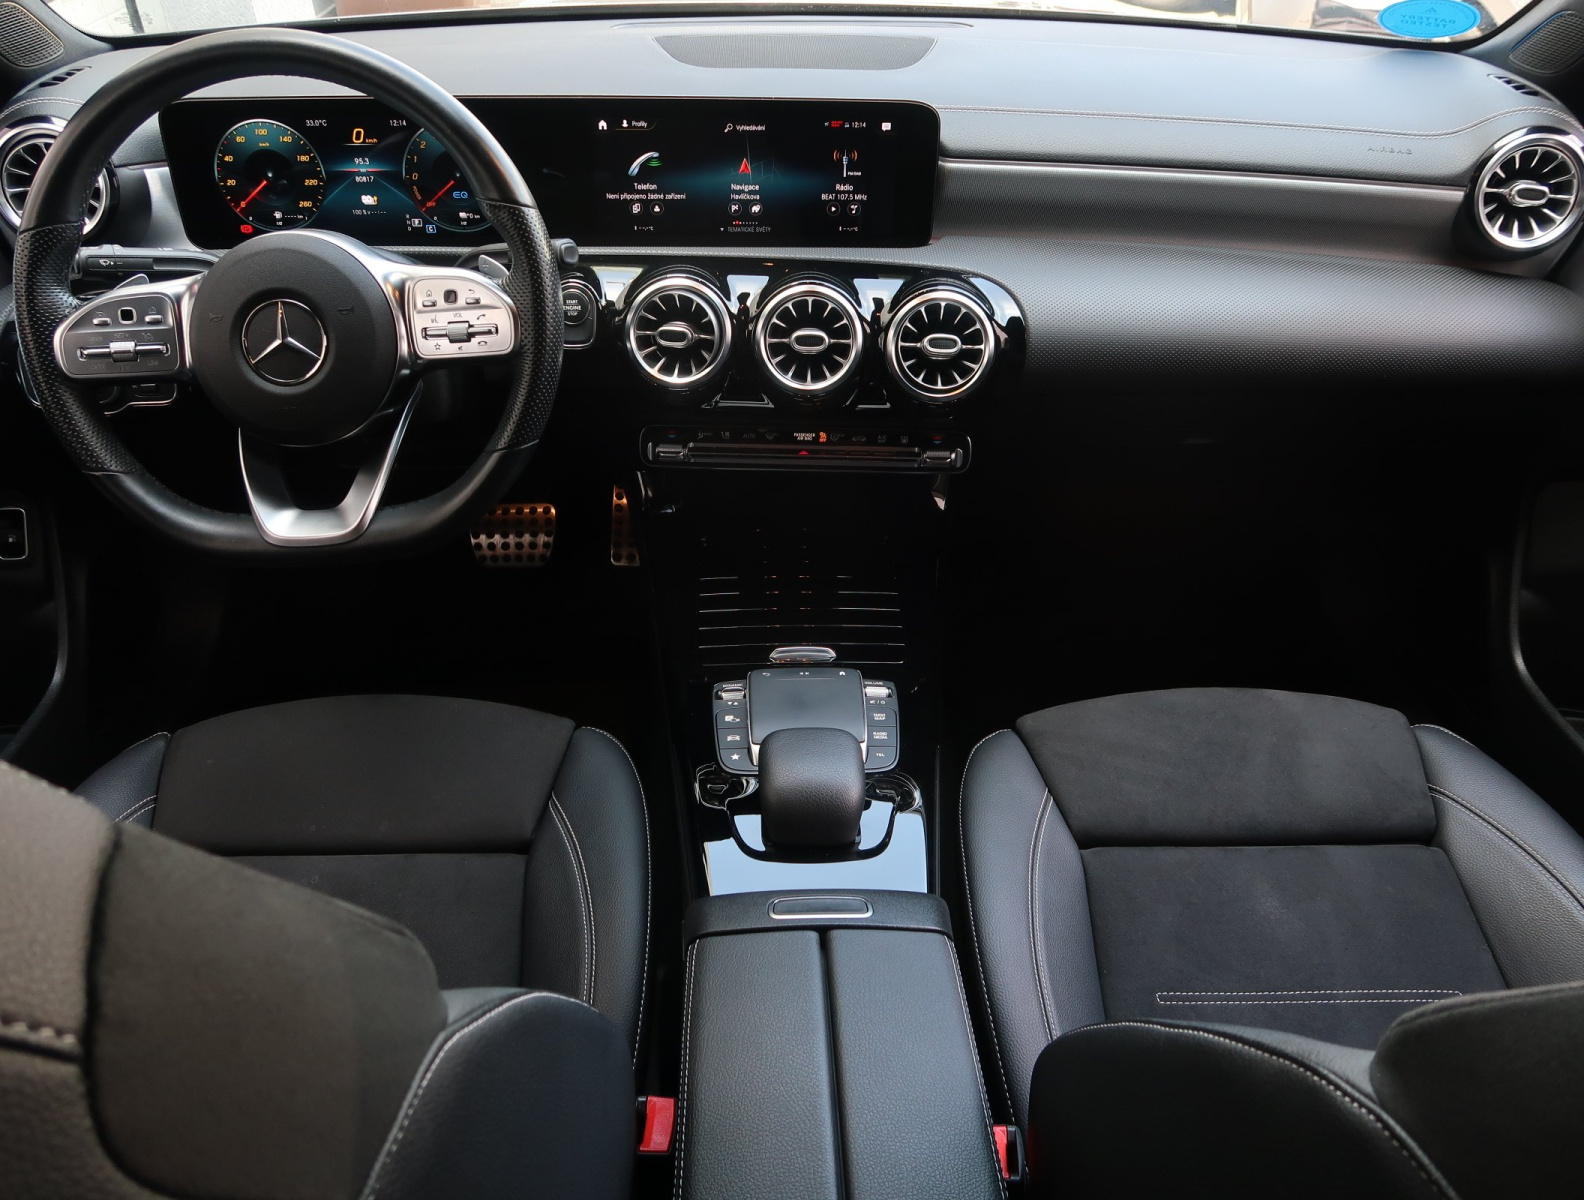 Mercedes-Benz CLA, 2020, 250e, 160kW